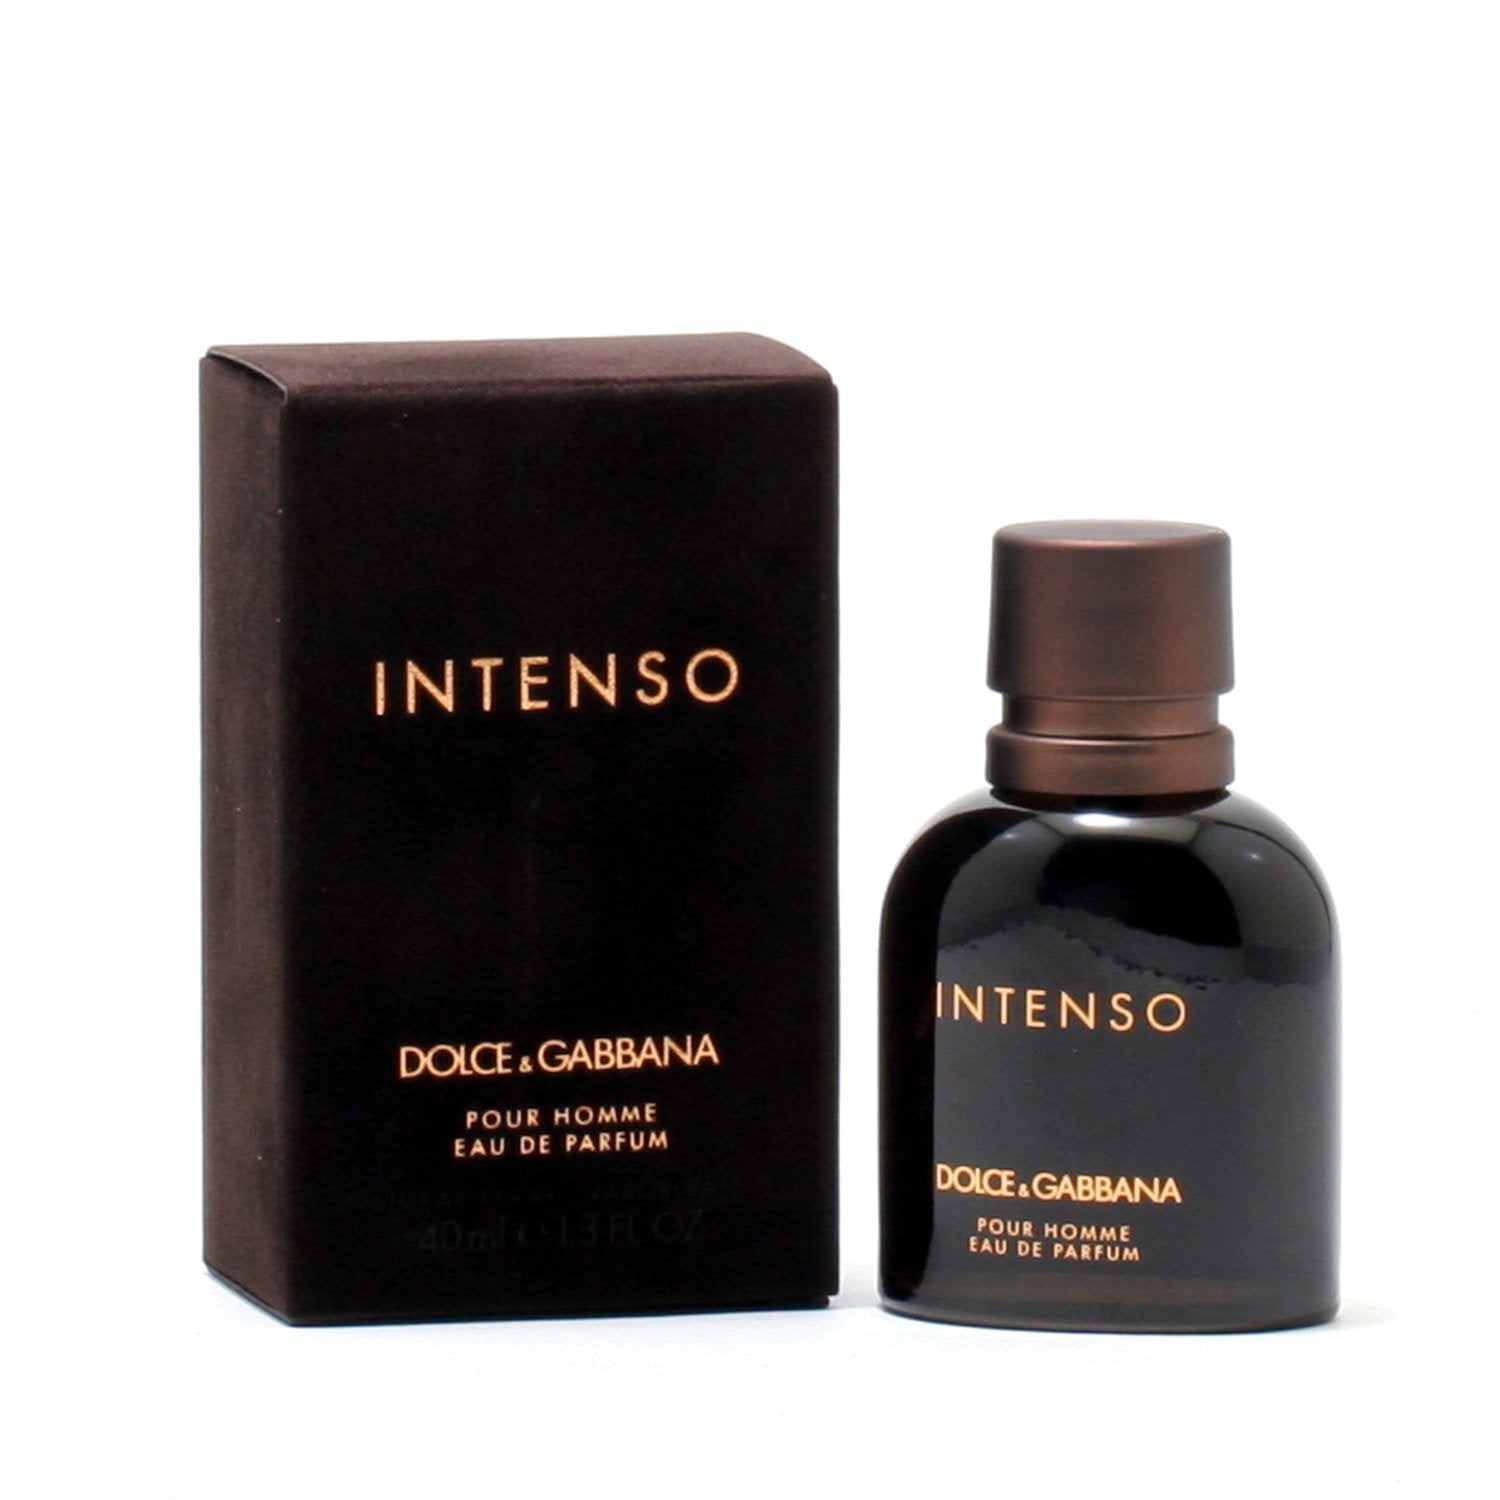 Dolce & Gabbana Intenso Eau de Parfum 2.5 oz Spray